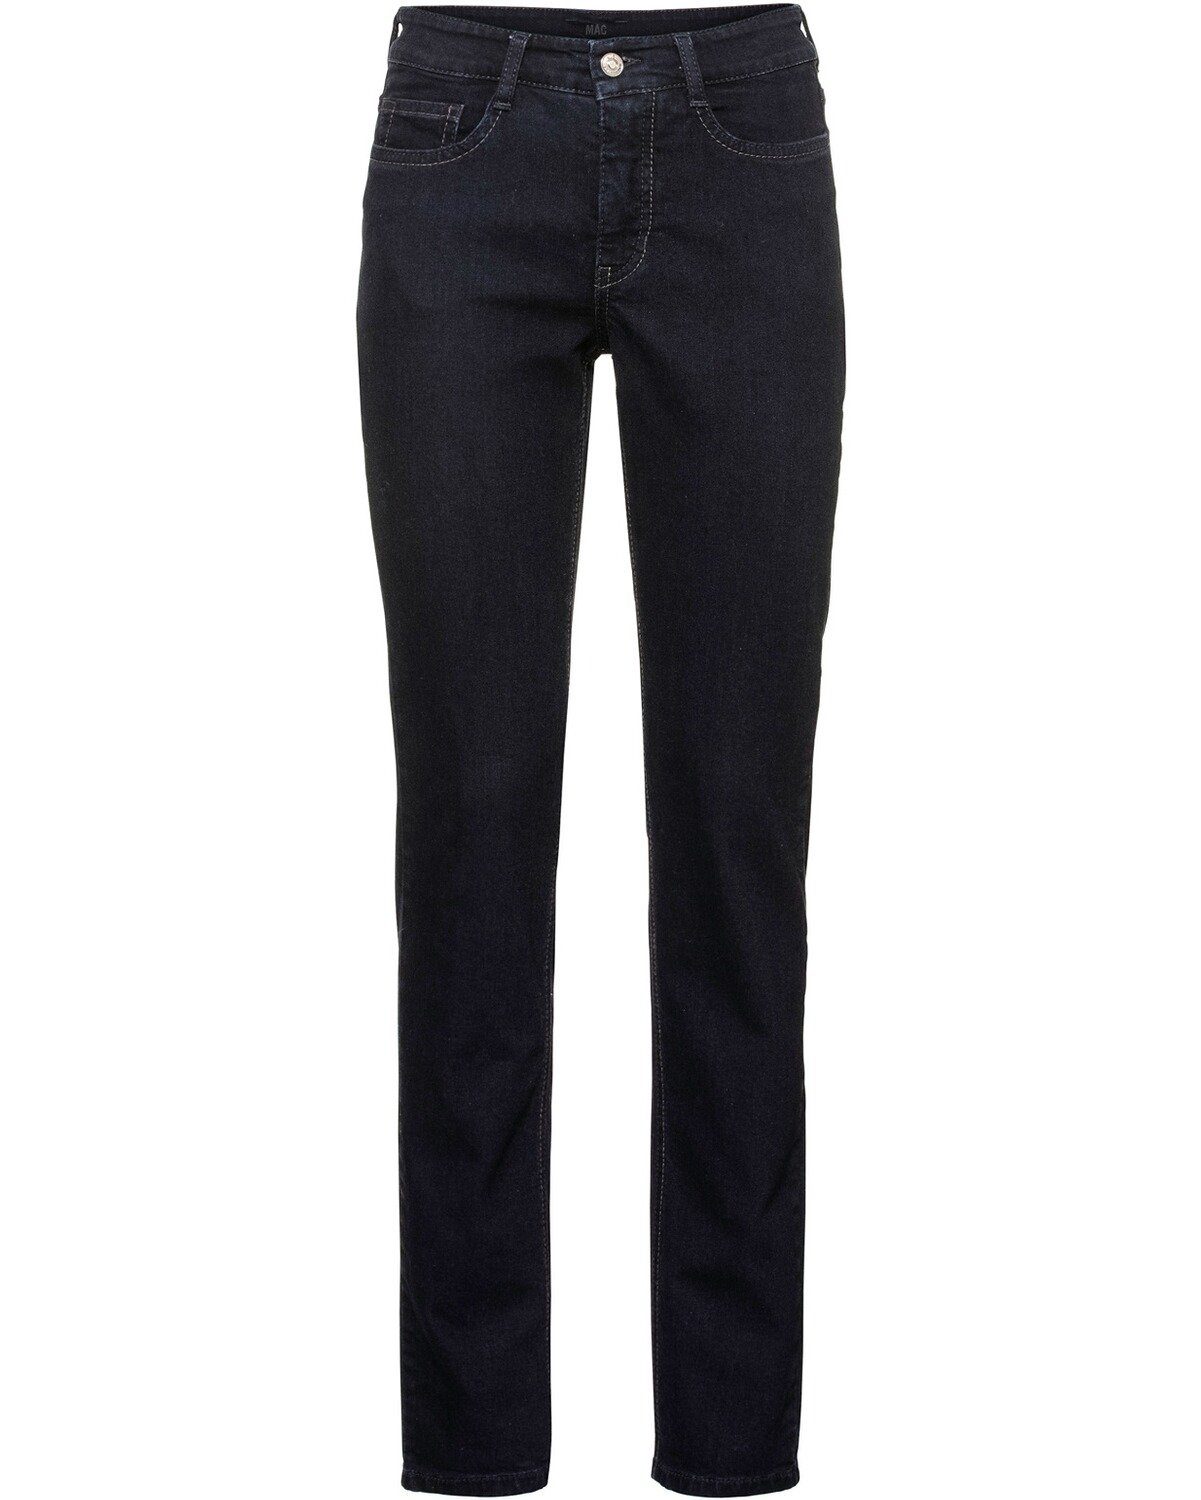 Angela Rinsewash/L32 5-Pocket-Jeans Pipe MAC Jeans